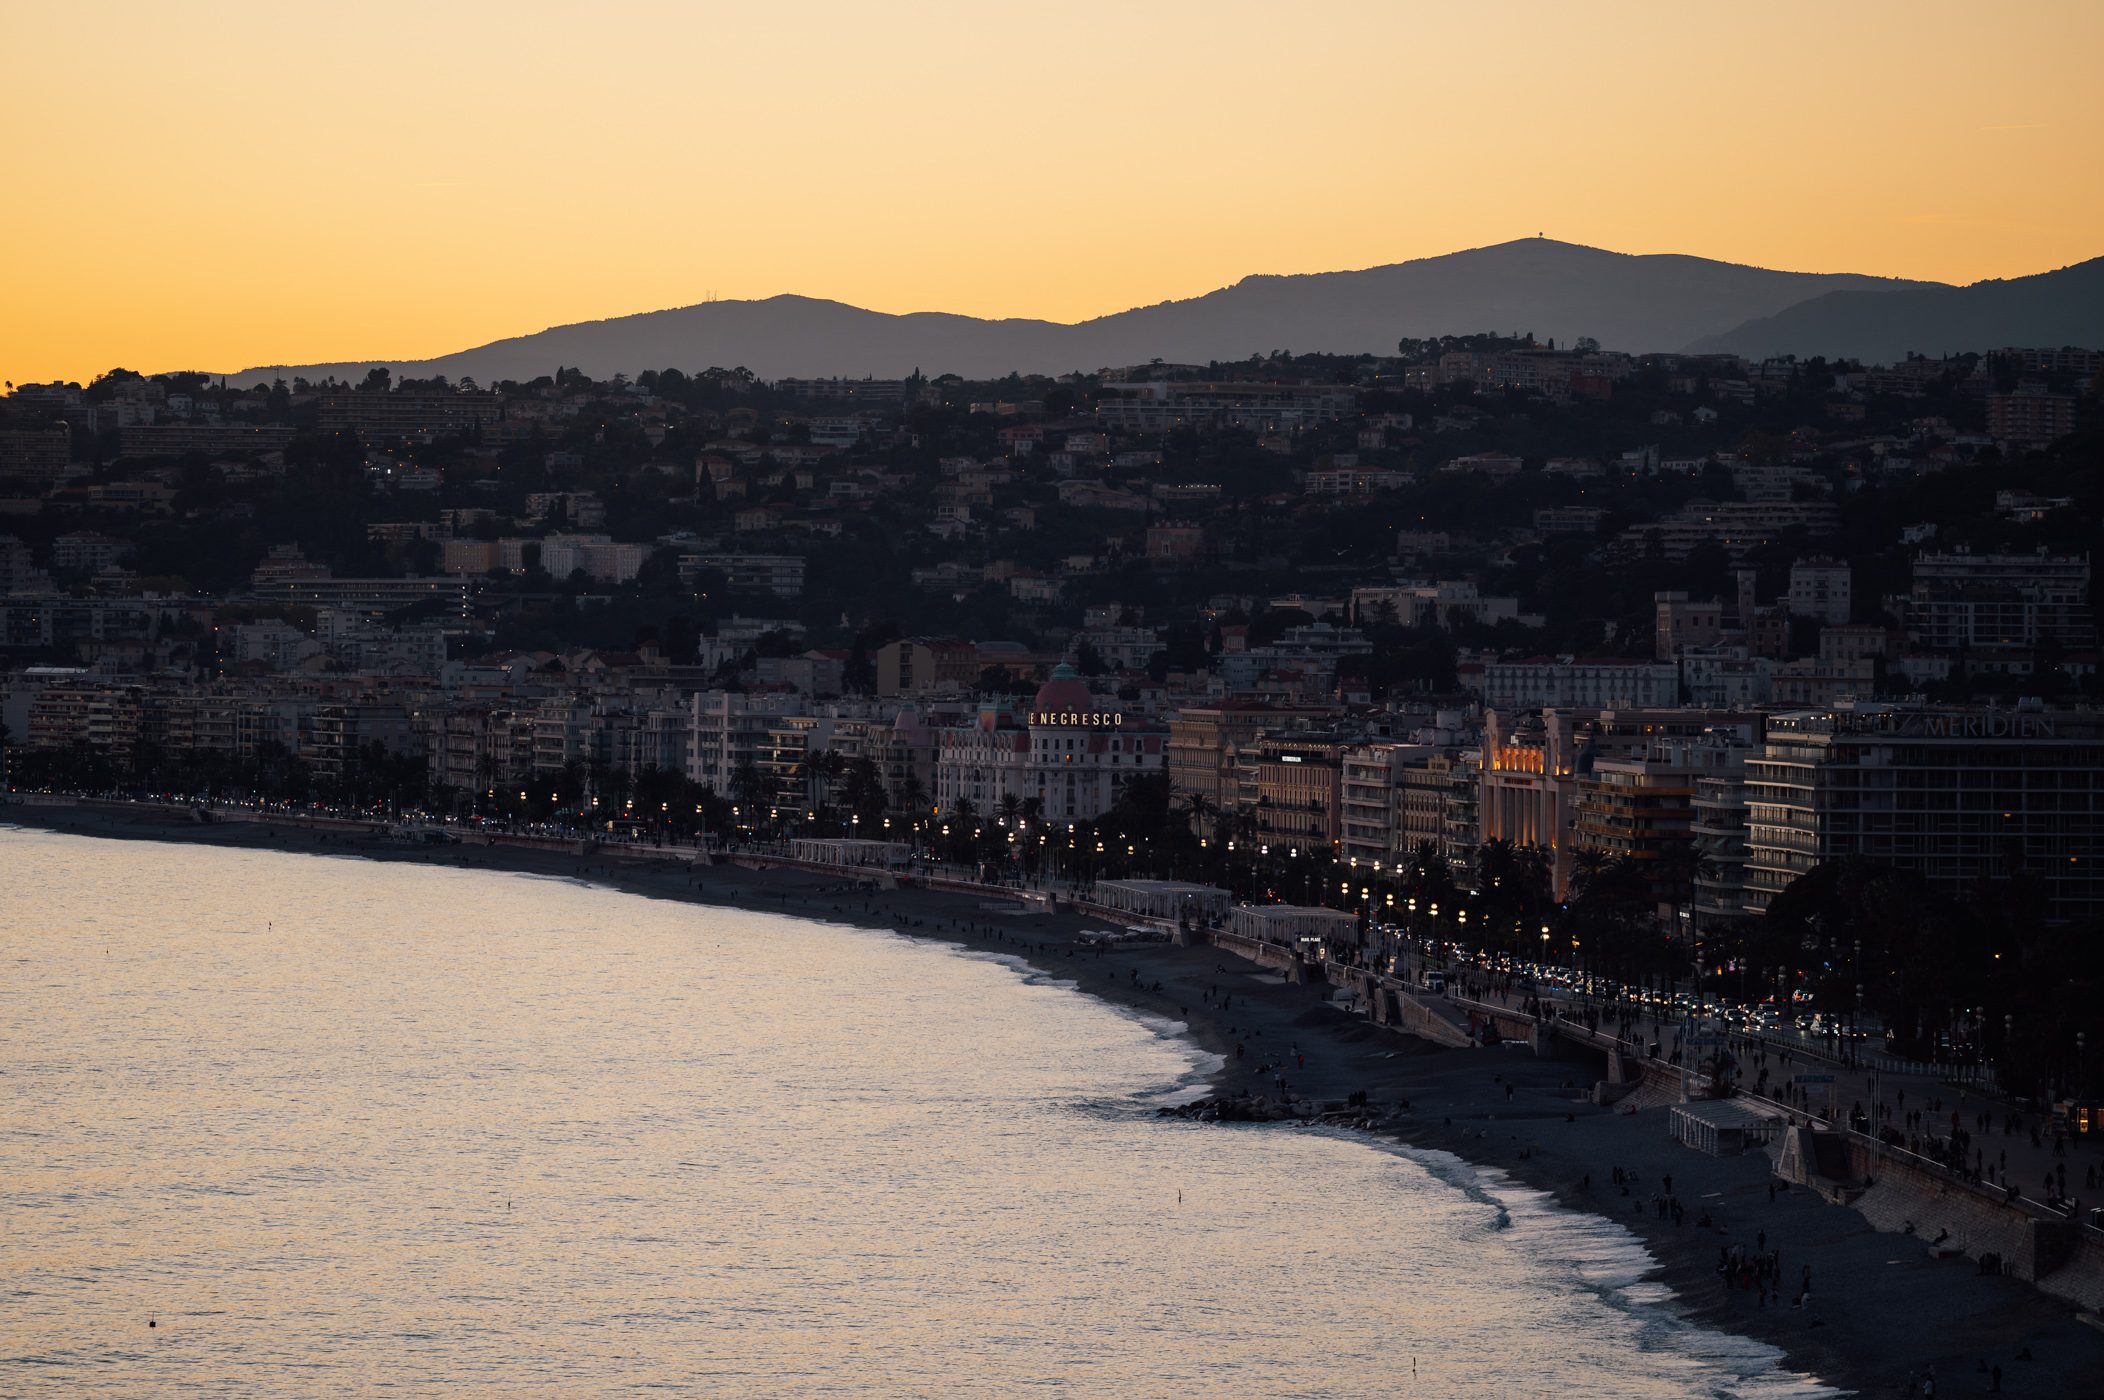 Nice - winter resort city on the UNESCO World Heritage List